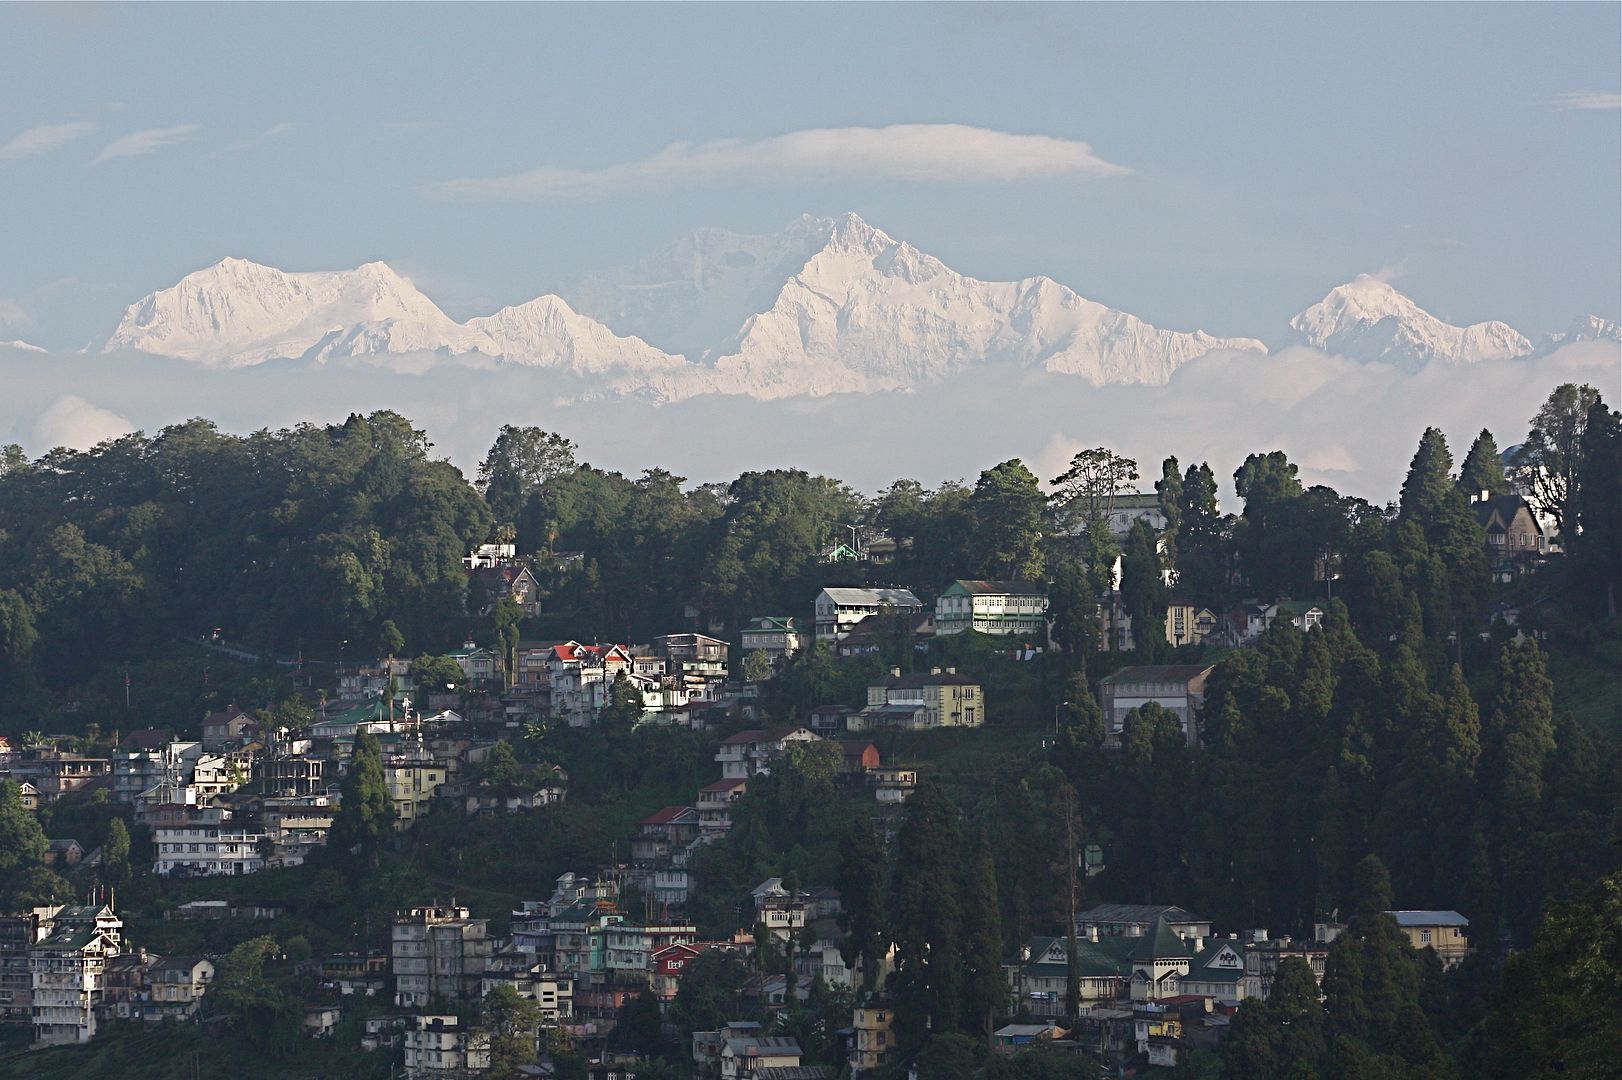 Darjeeling_with_the_Himalayas_and_the_Kangchenjunga_in_the_backdrop_zpsjojtfcjk.jpg